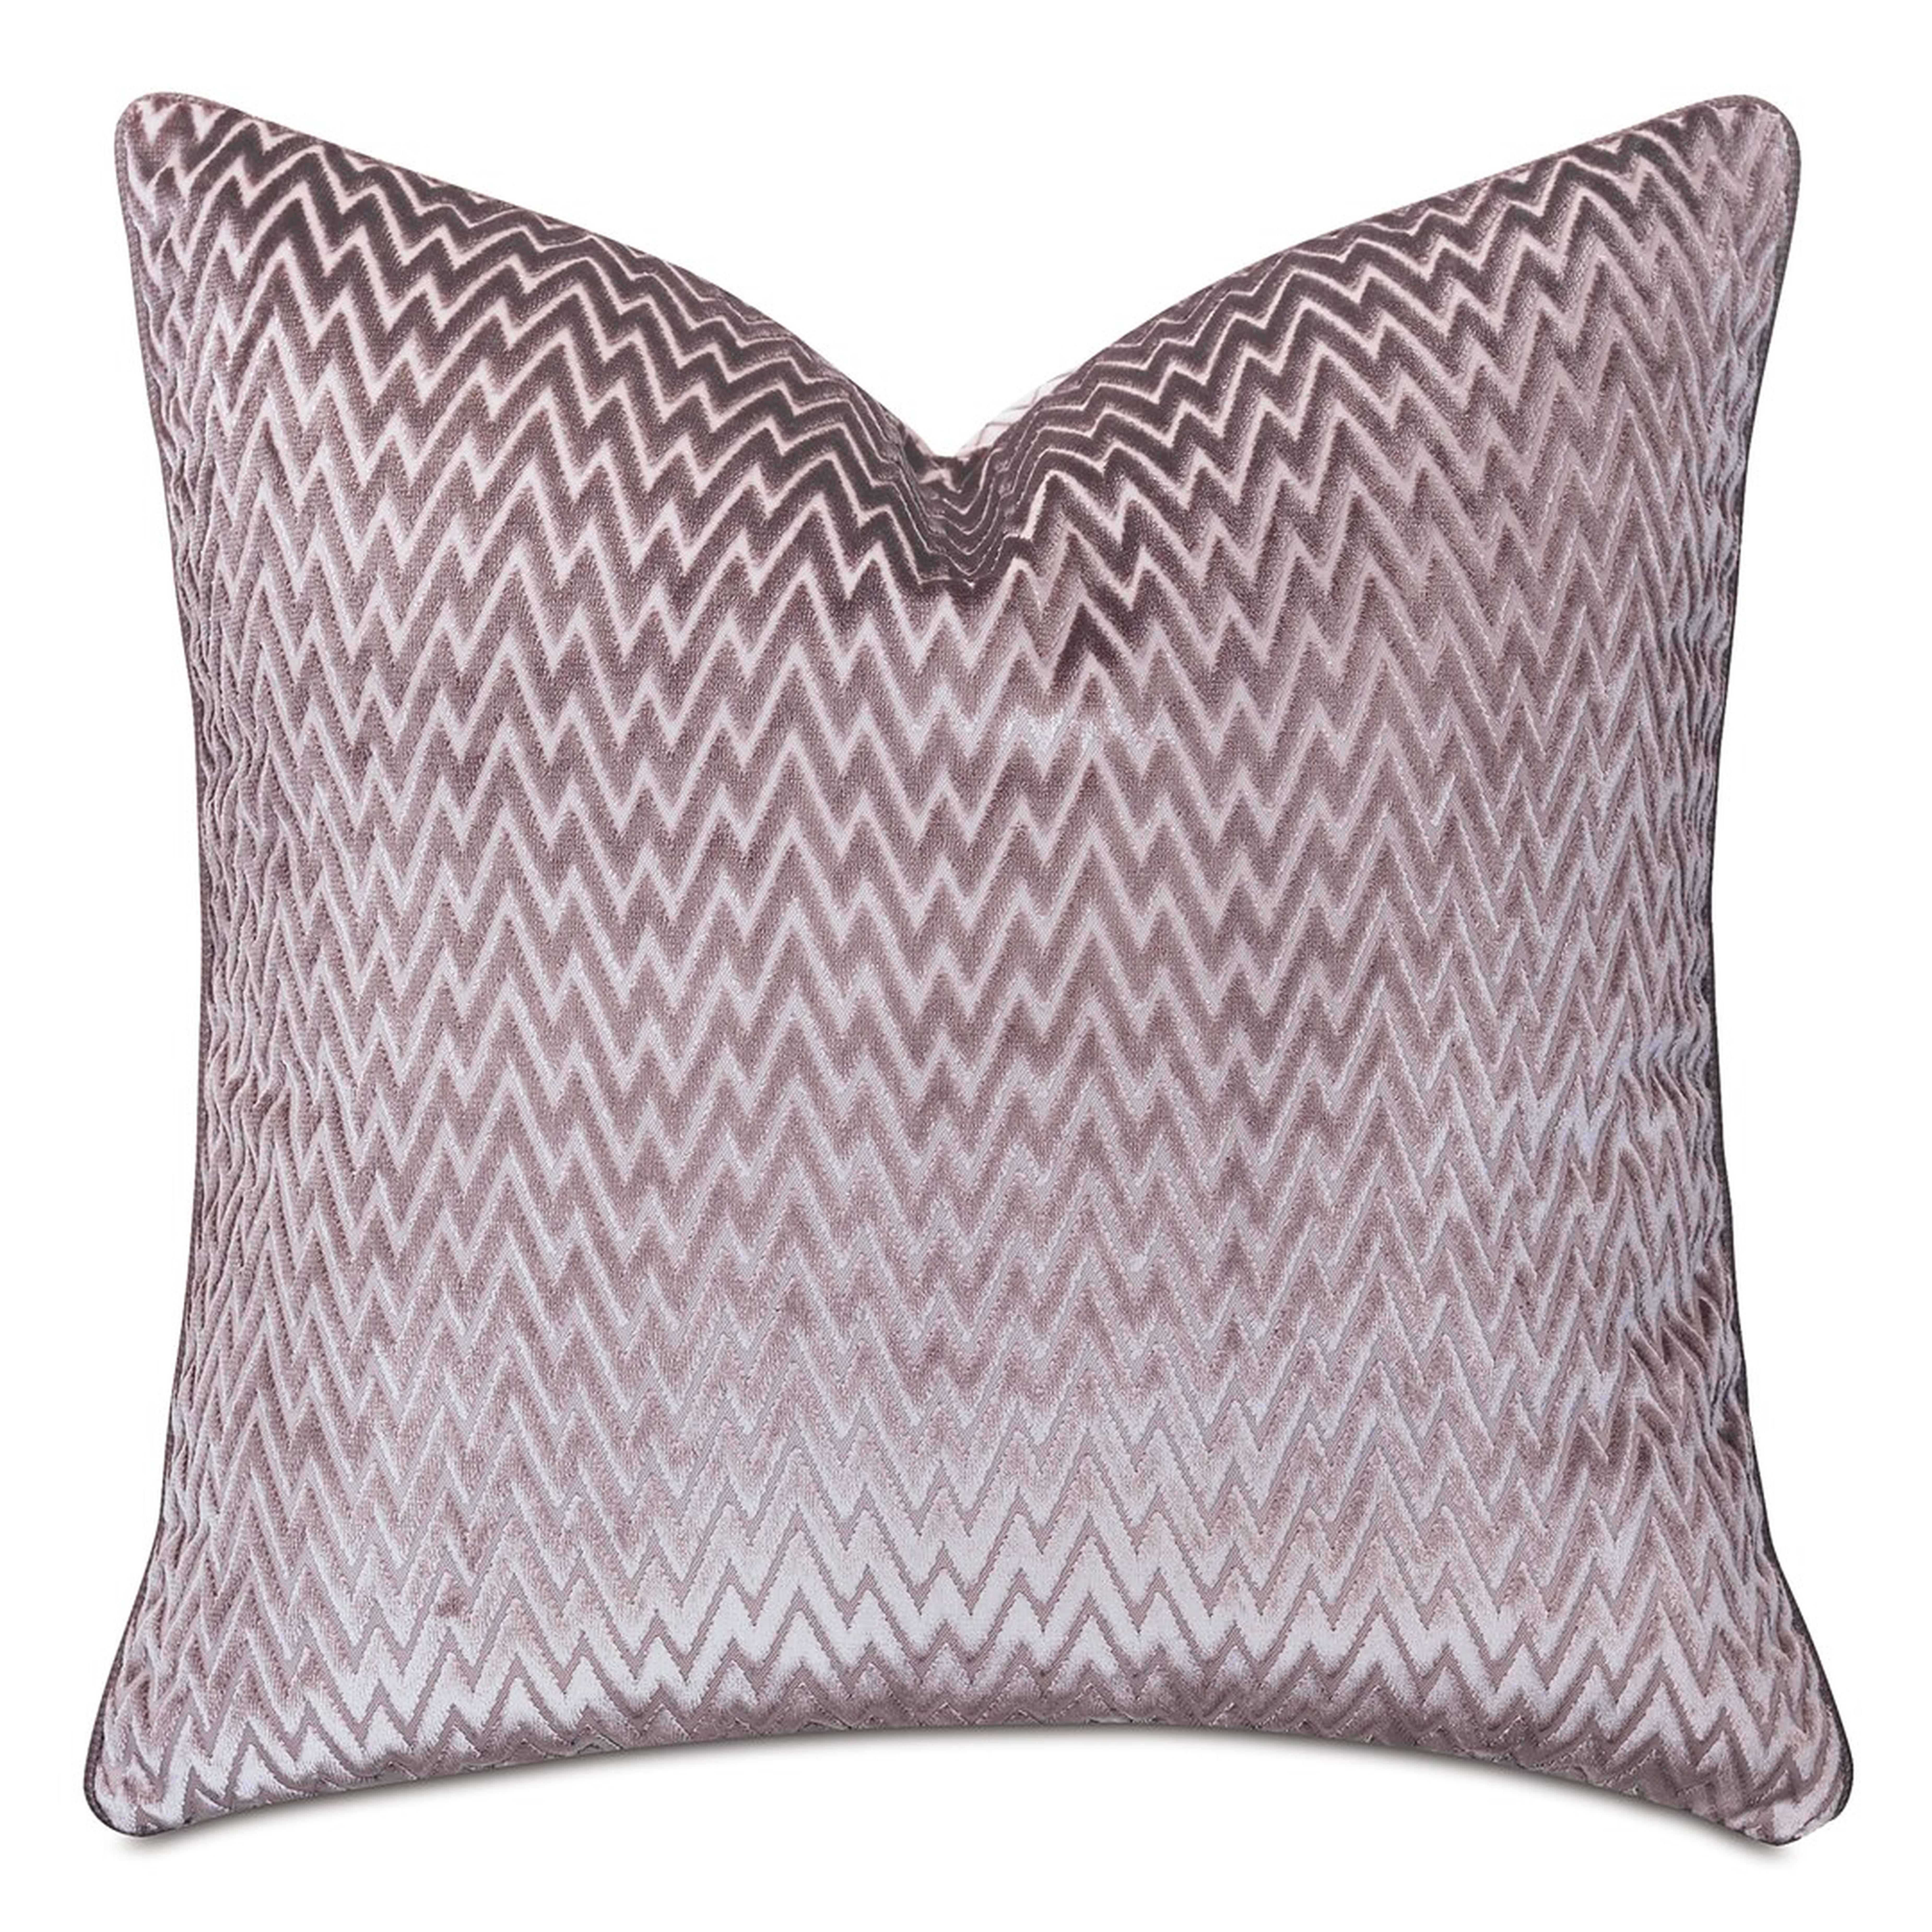 Eastern Accents Evie by Alexa Hampton Decorative Square Pillow Cover & Insert - Perigold